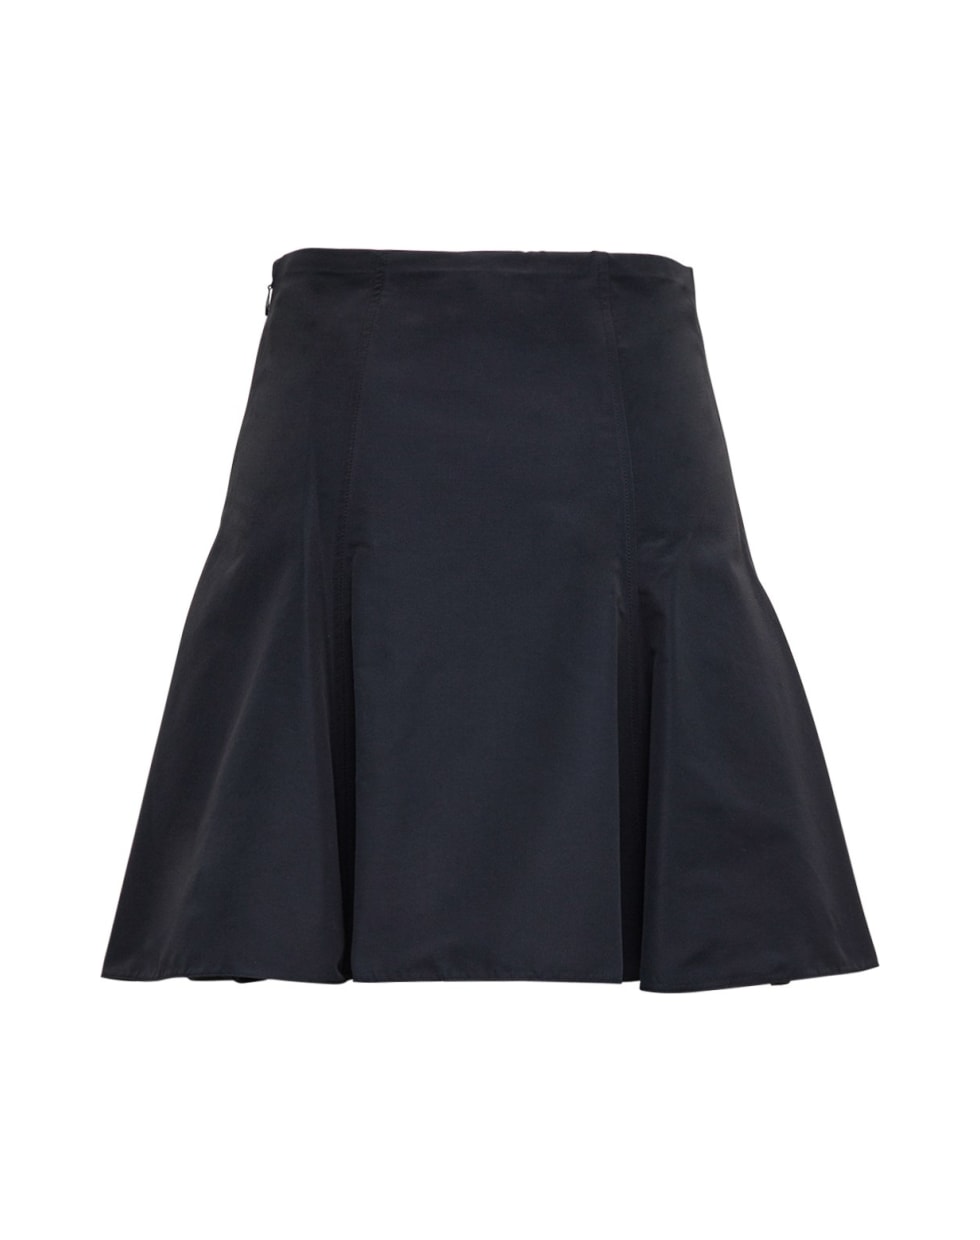 Valentino Black Micro Faille Skirt - Black